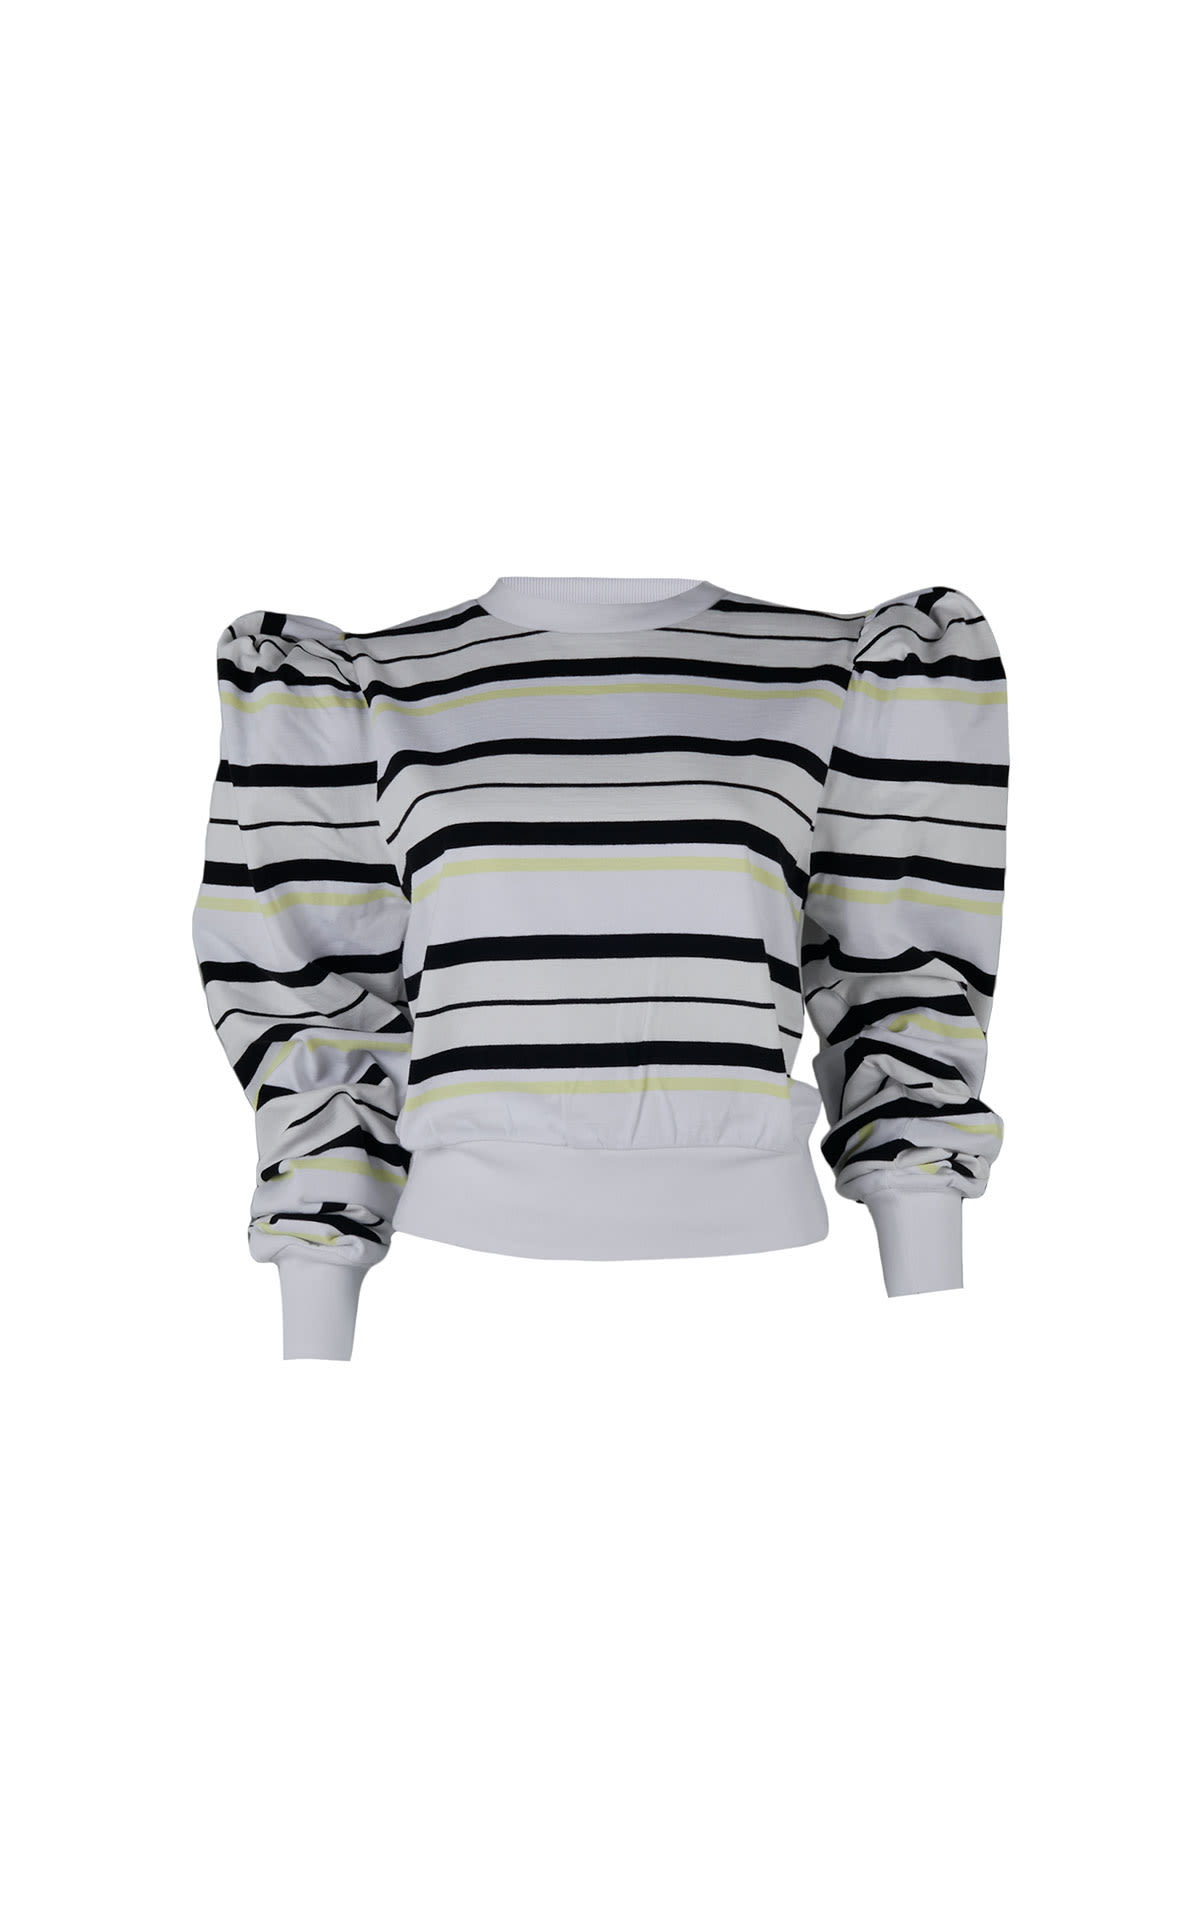 Vivienne Westwood Aramis sweater from Bicester Village